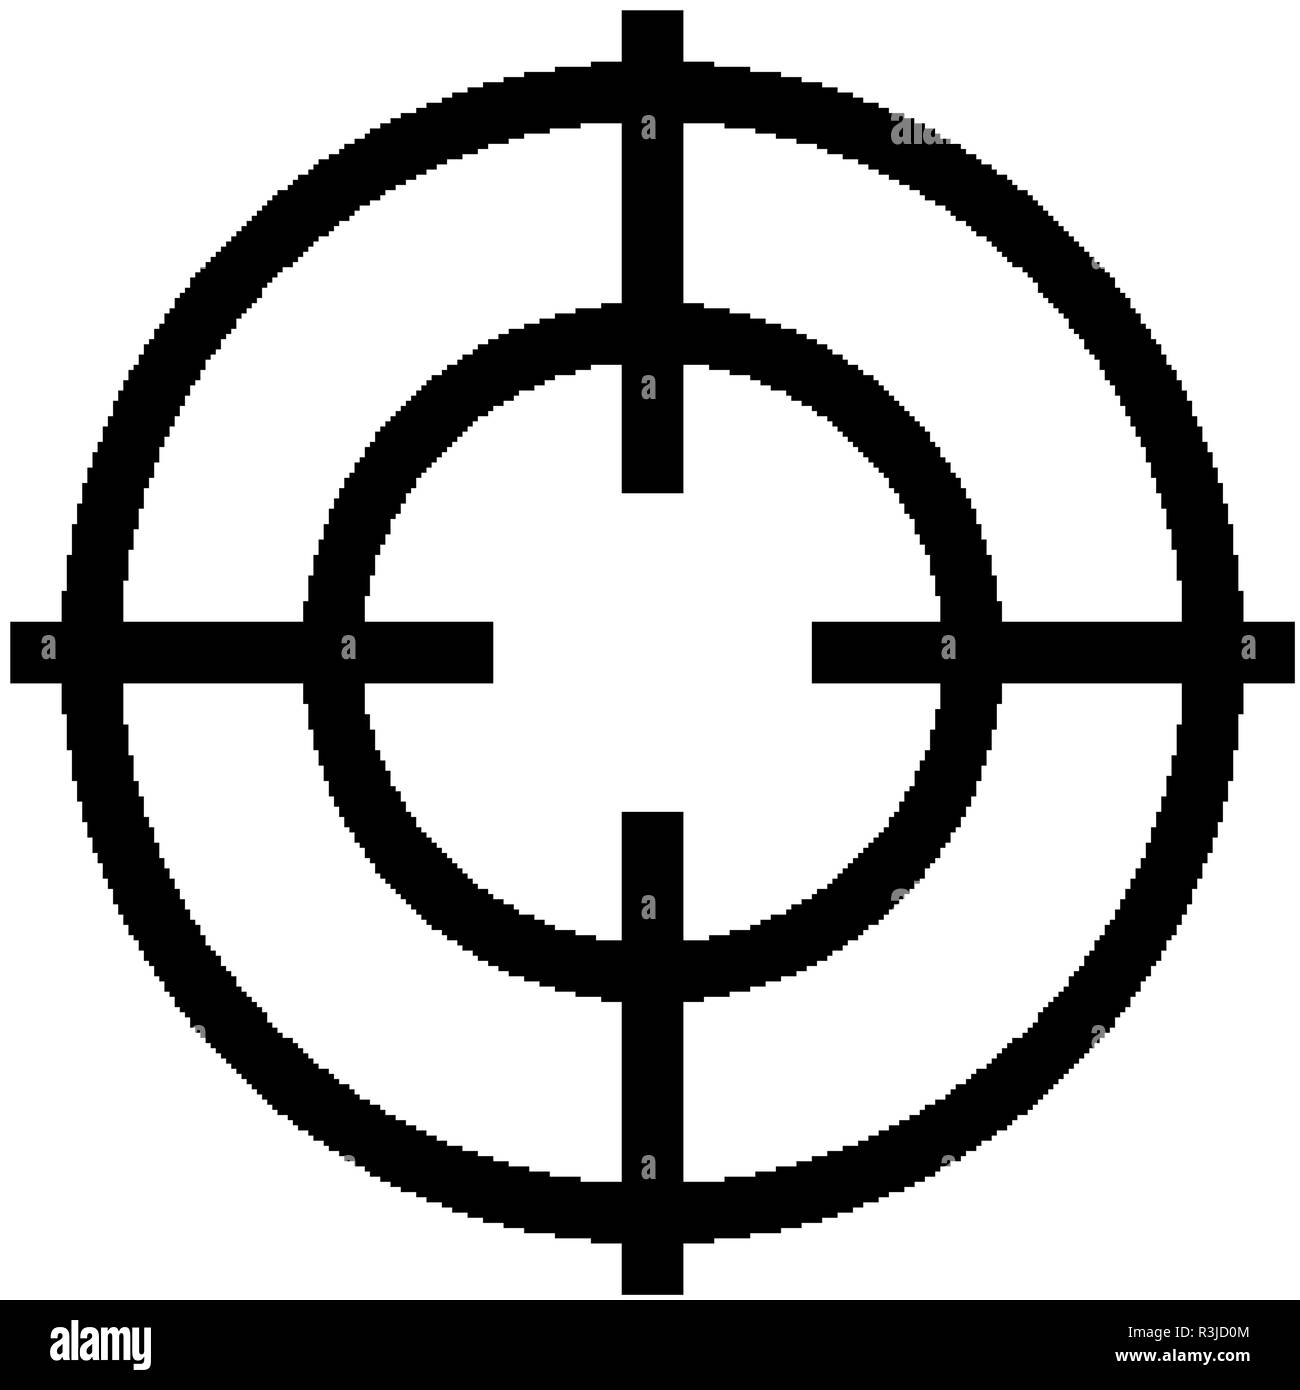 Sniper crosshairs icon. Target aim cross. Rifle scope rear sight Stock Vector